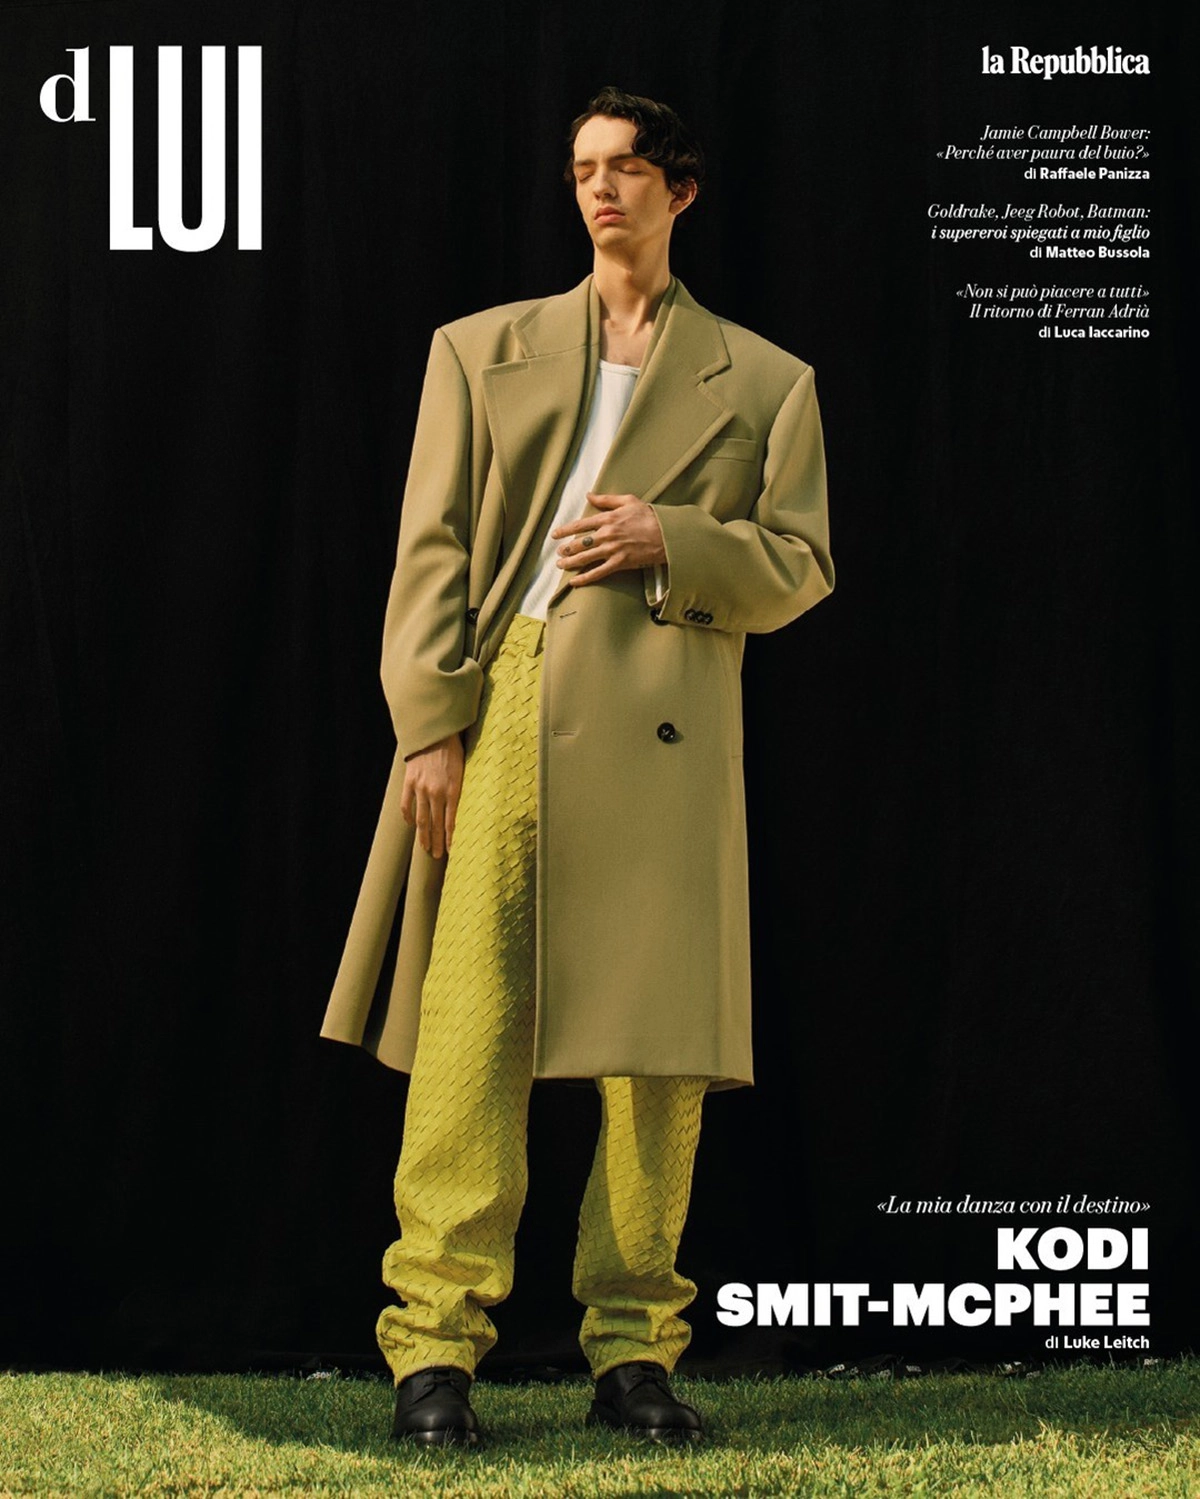 Kodi Smit-McPhee covers D Lui la Repubblica October 29th, 2022 by Sander Muylaert